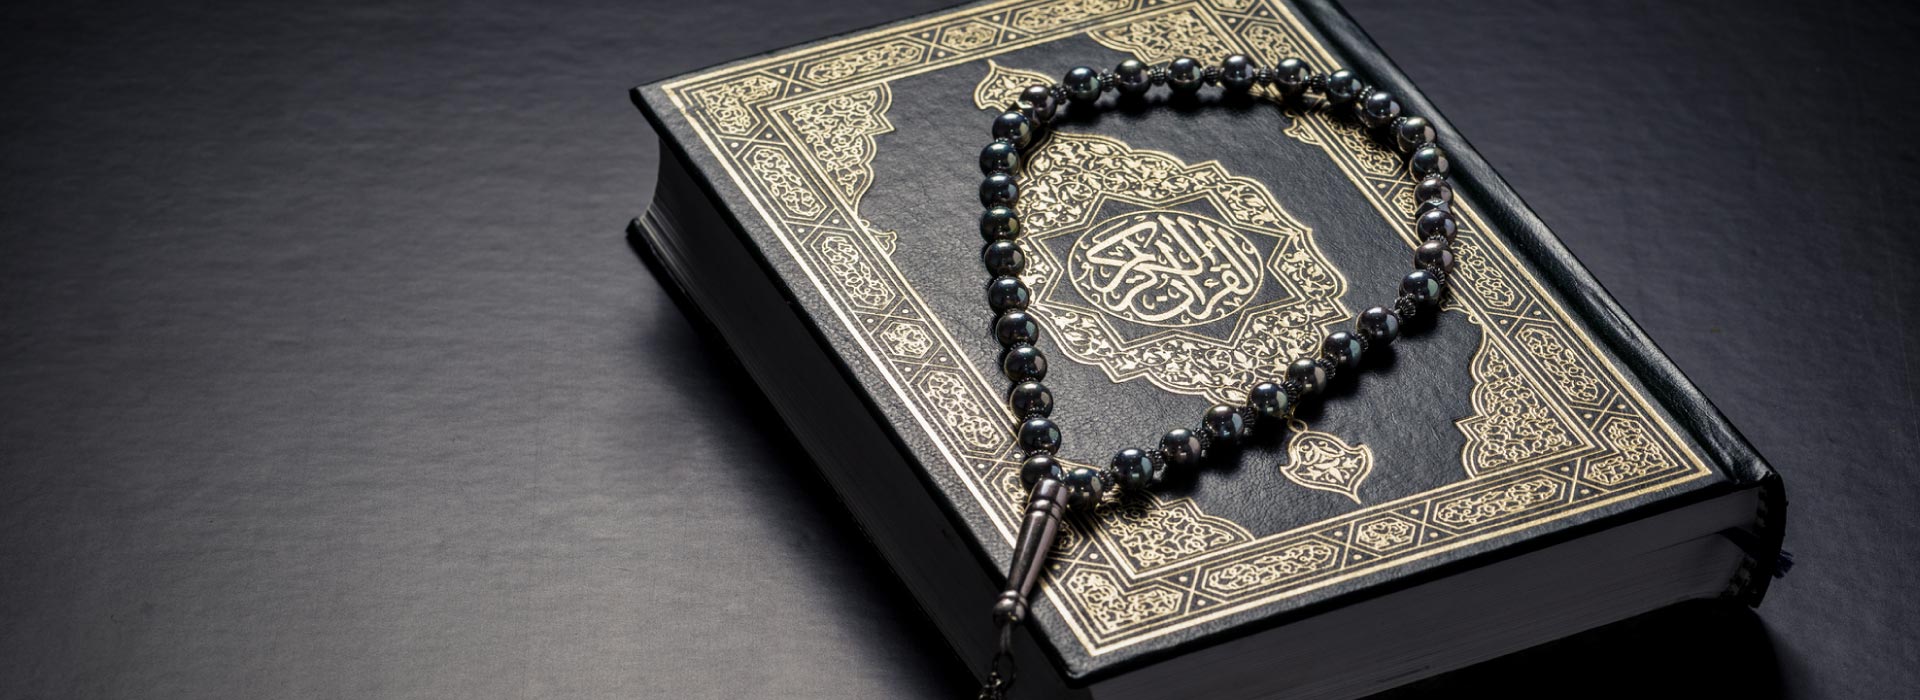 Prayer beads on top of Quran